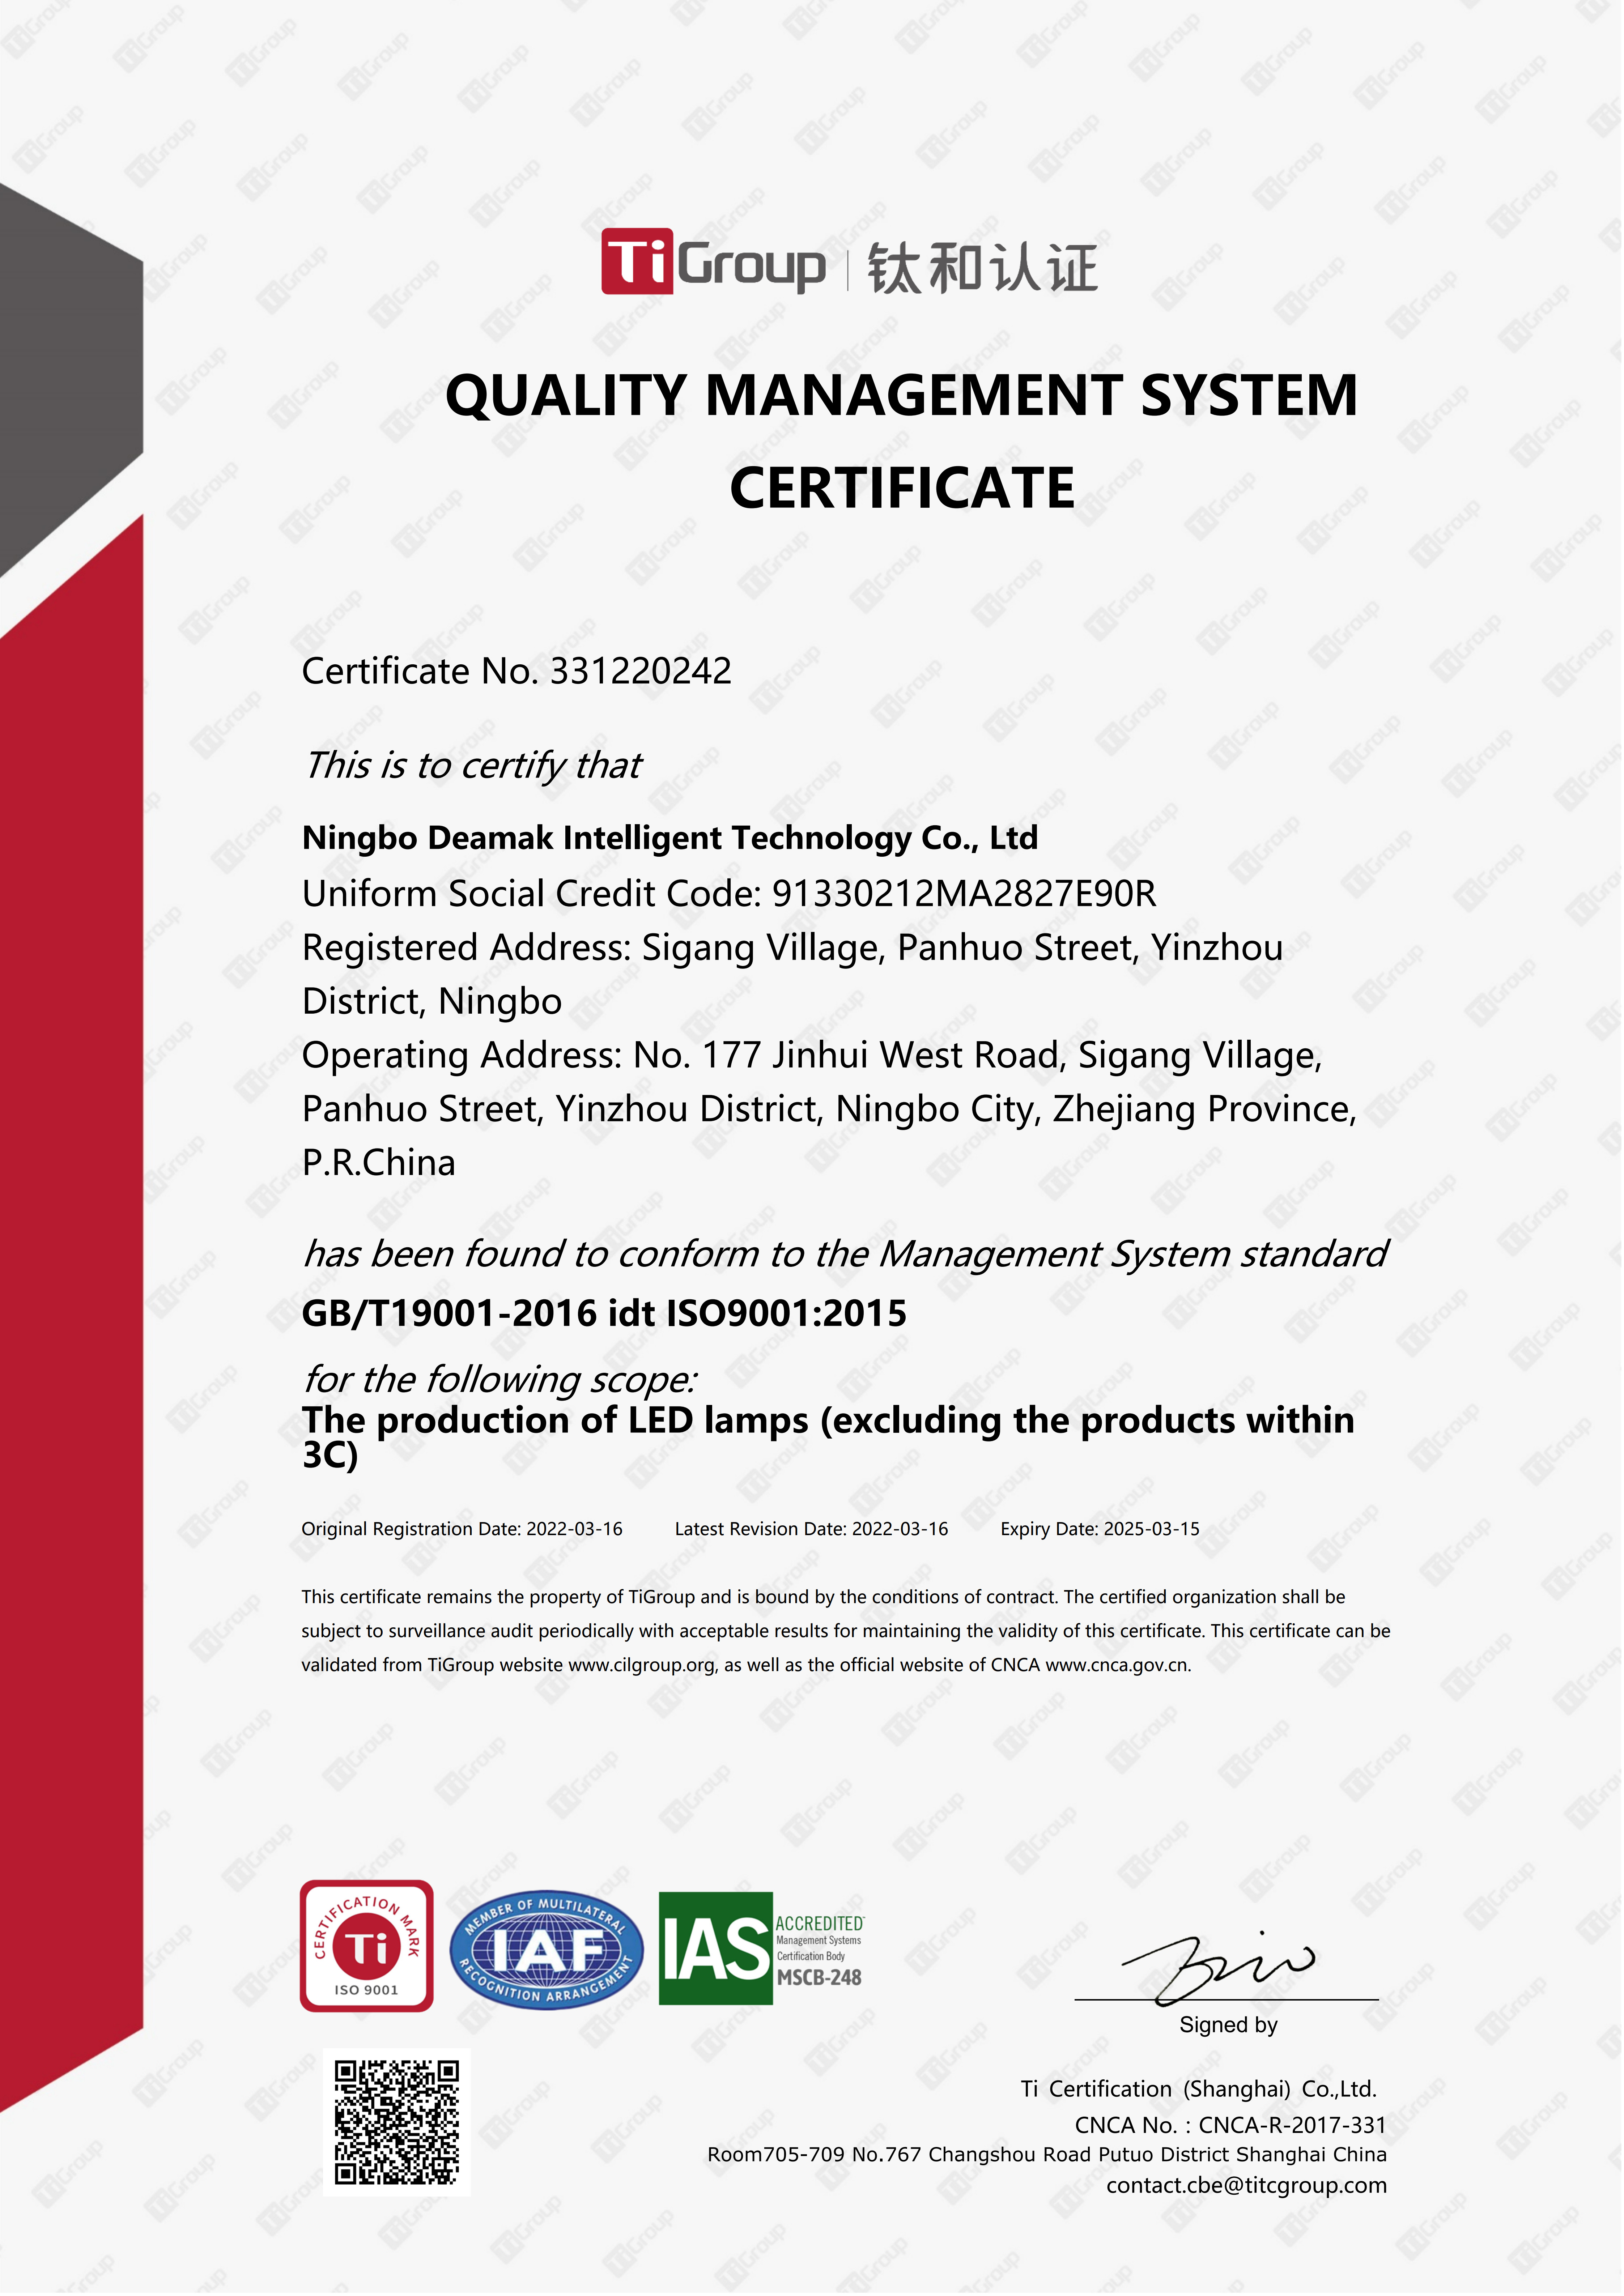 Ningbo Deamak ISO 9001 Engels_1